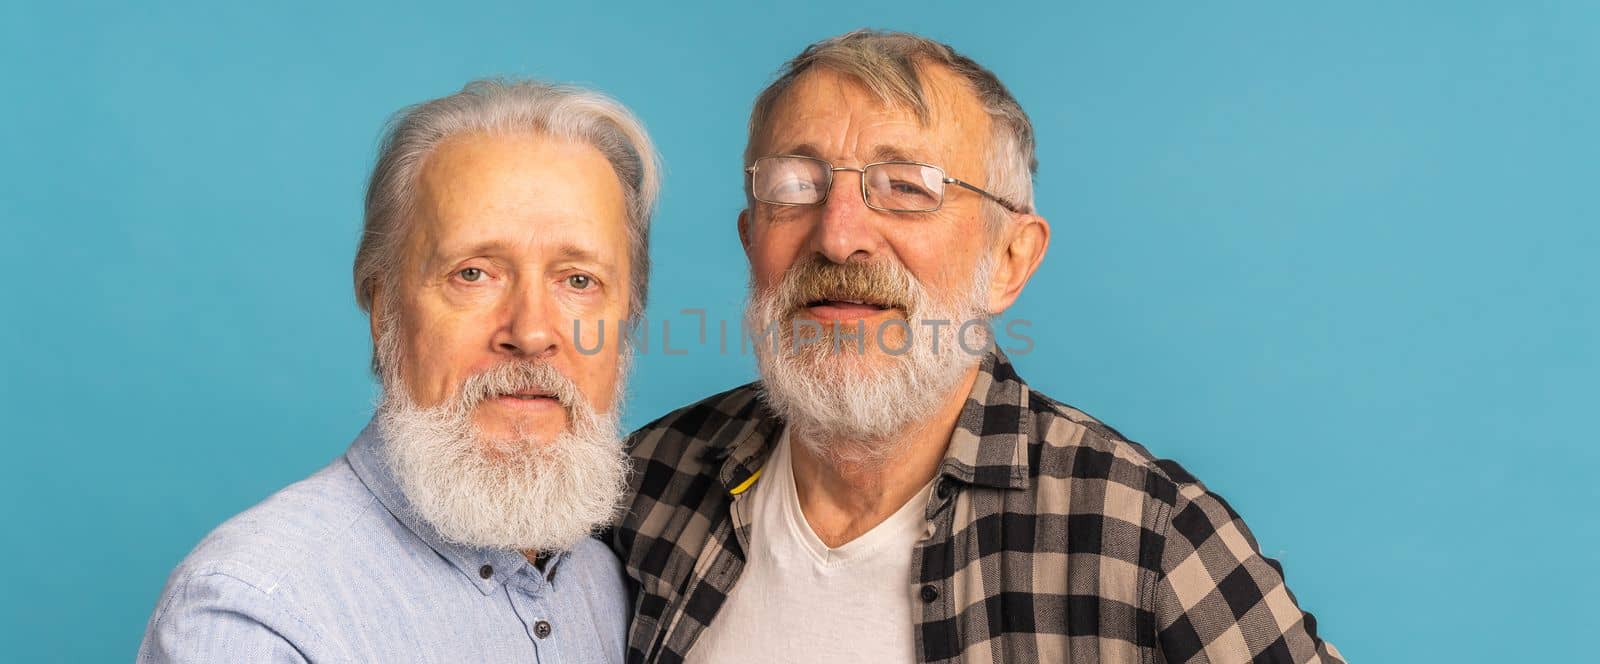 Portrait two elderly man friends standing over blue background - friendship, aged and senior